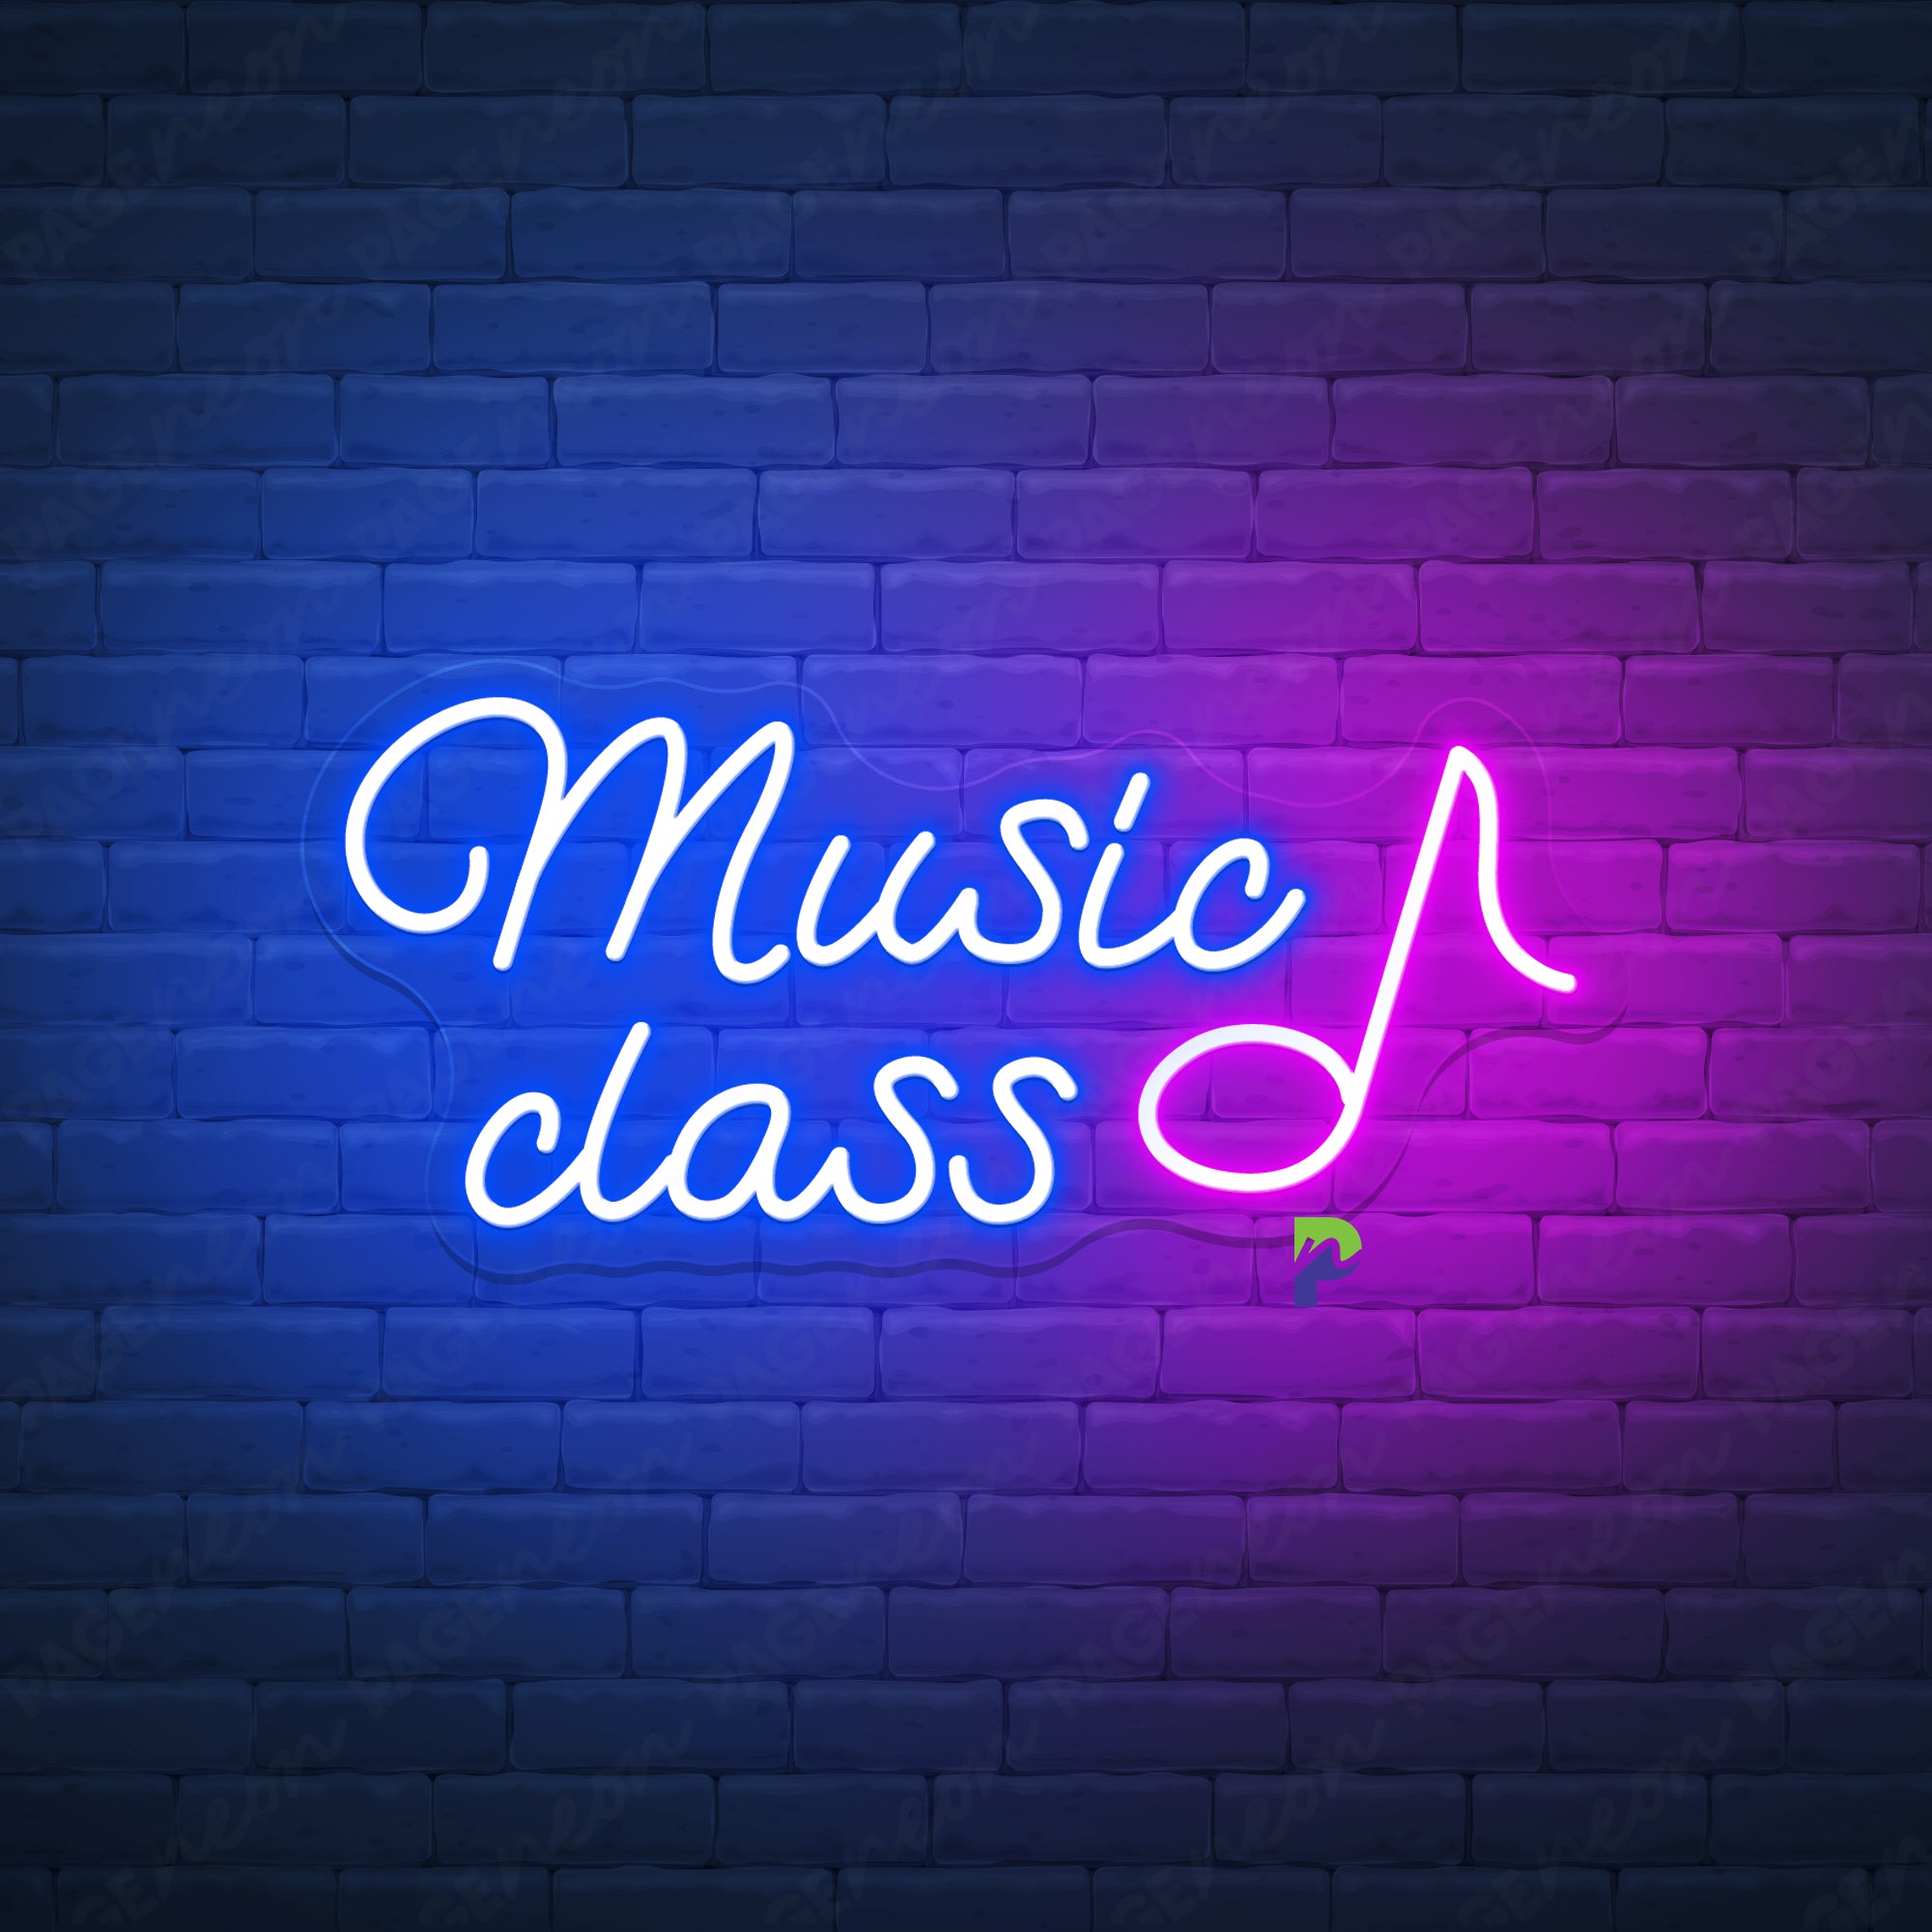 Music Class Neon Sign Big Led Light